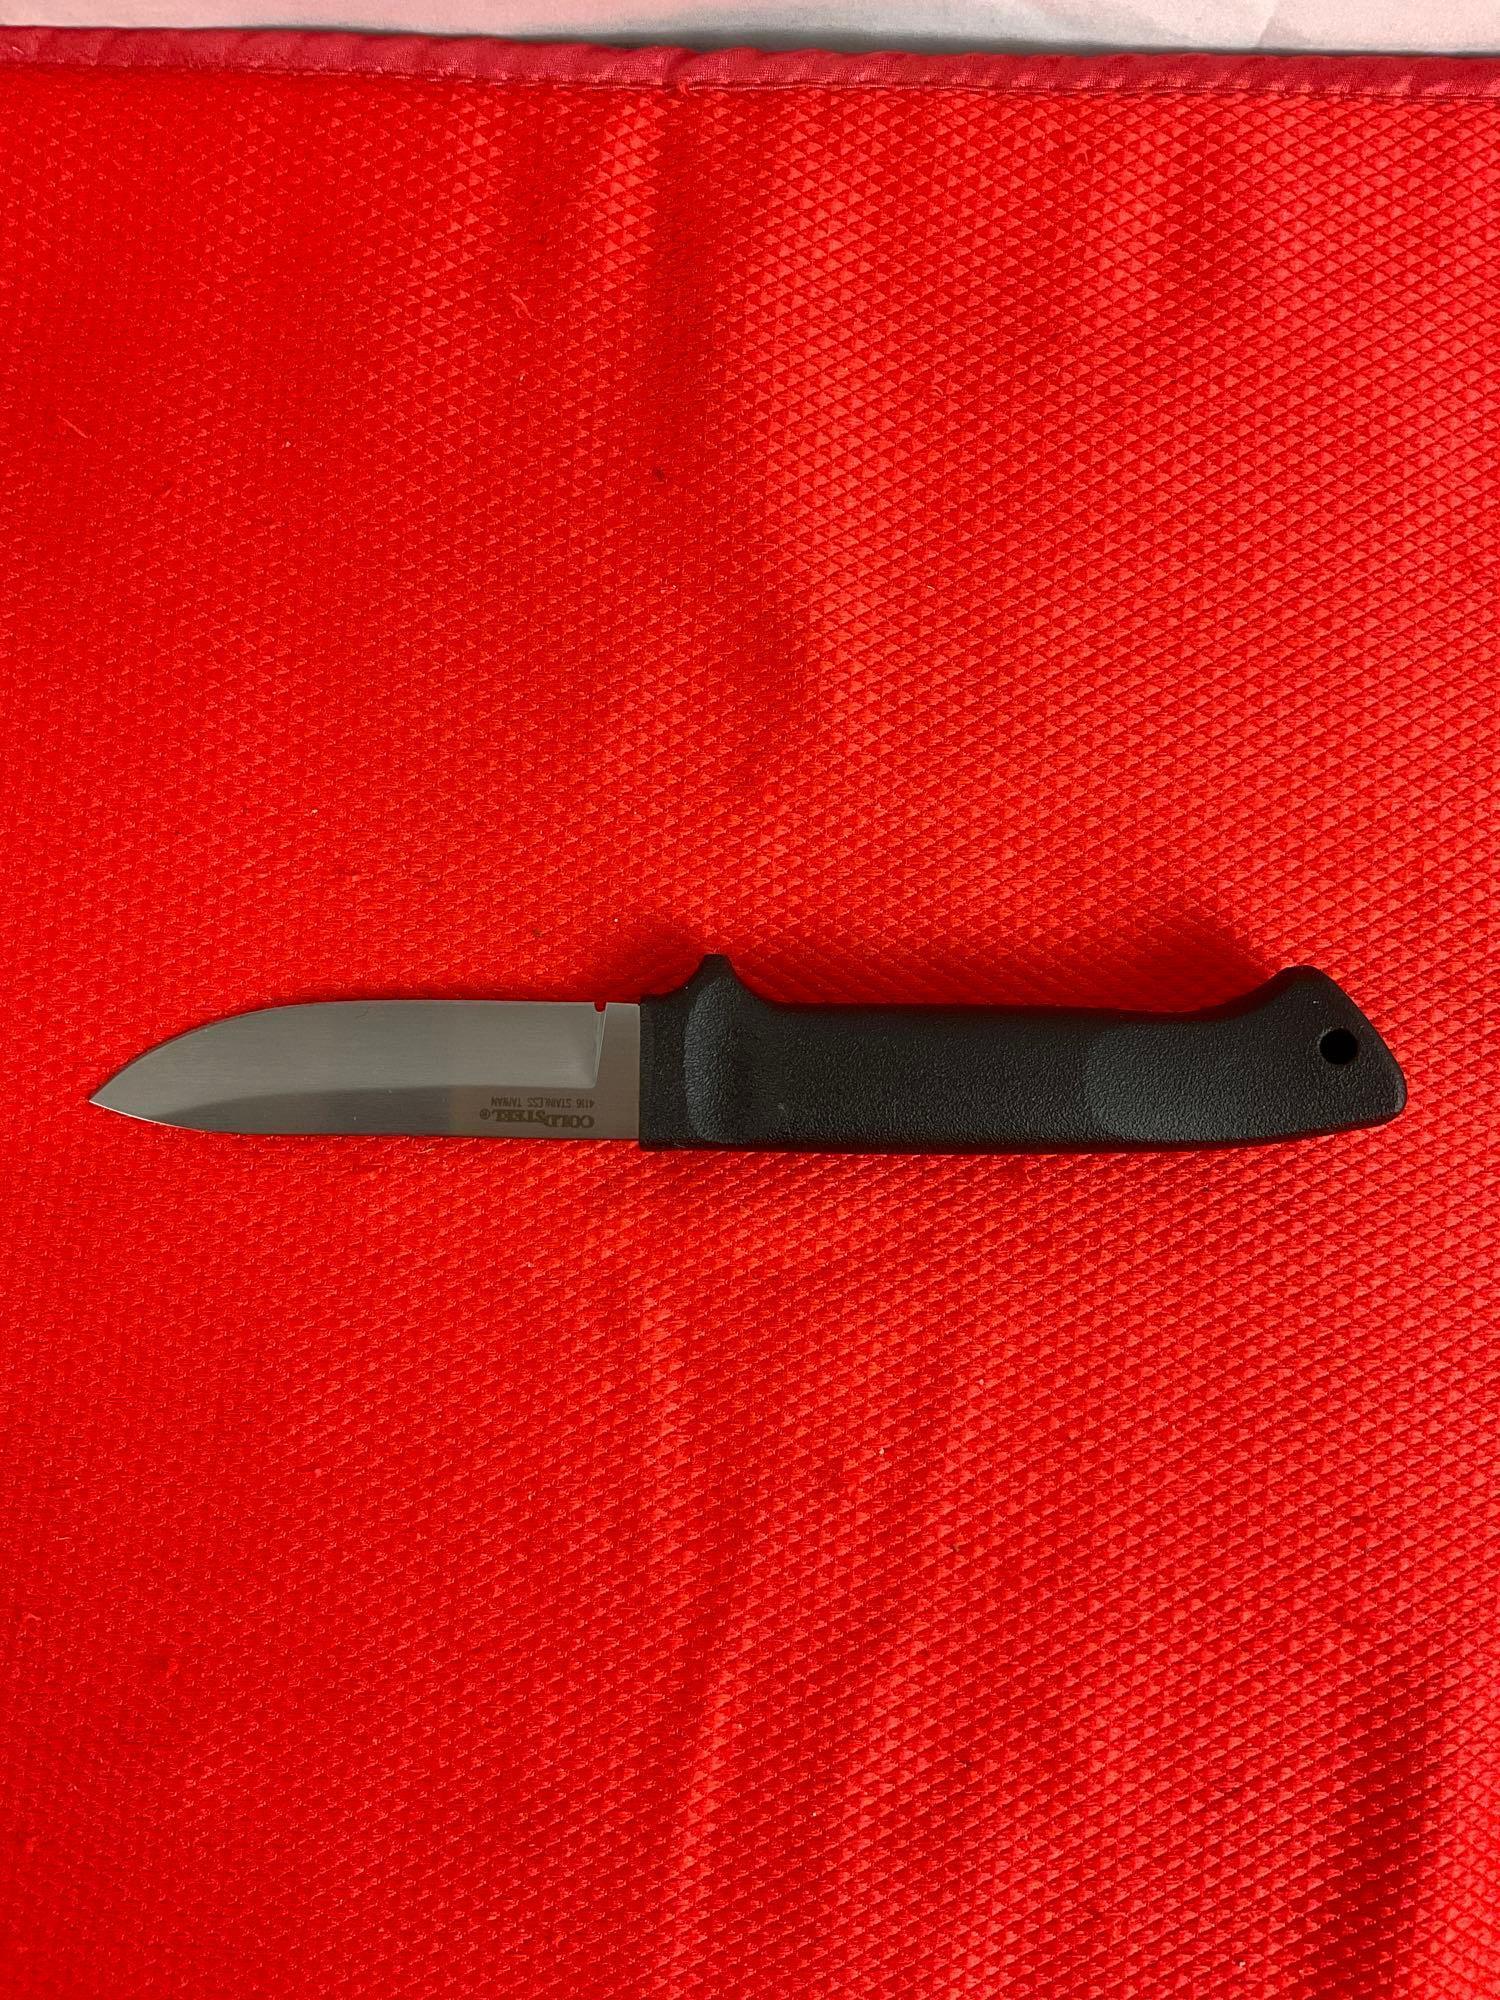 Cold Steel 3.5" Stainless Steel Fixed Blade Pendleton Lite Hunter Knife w/ Sheath No. 20SPH. LNIB.